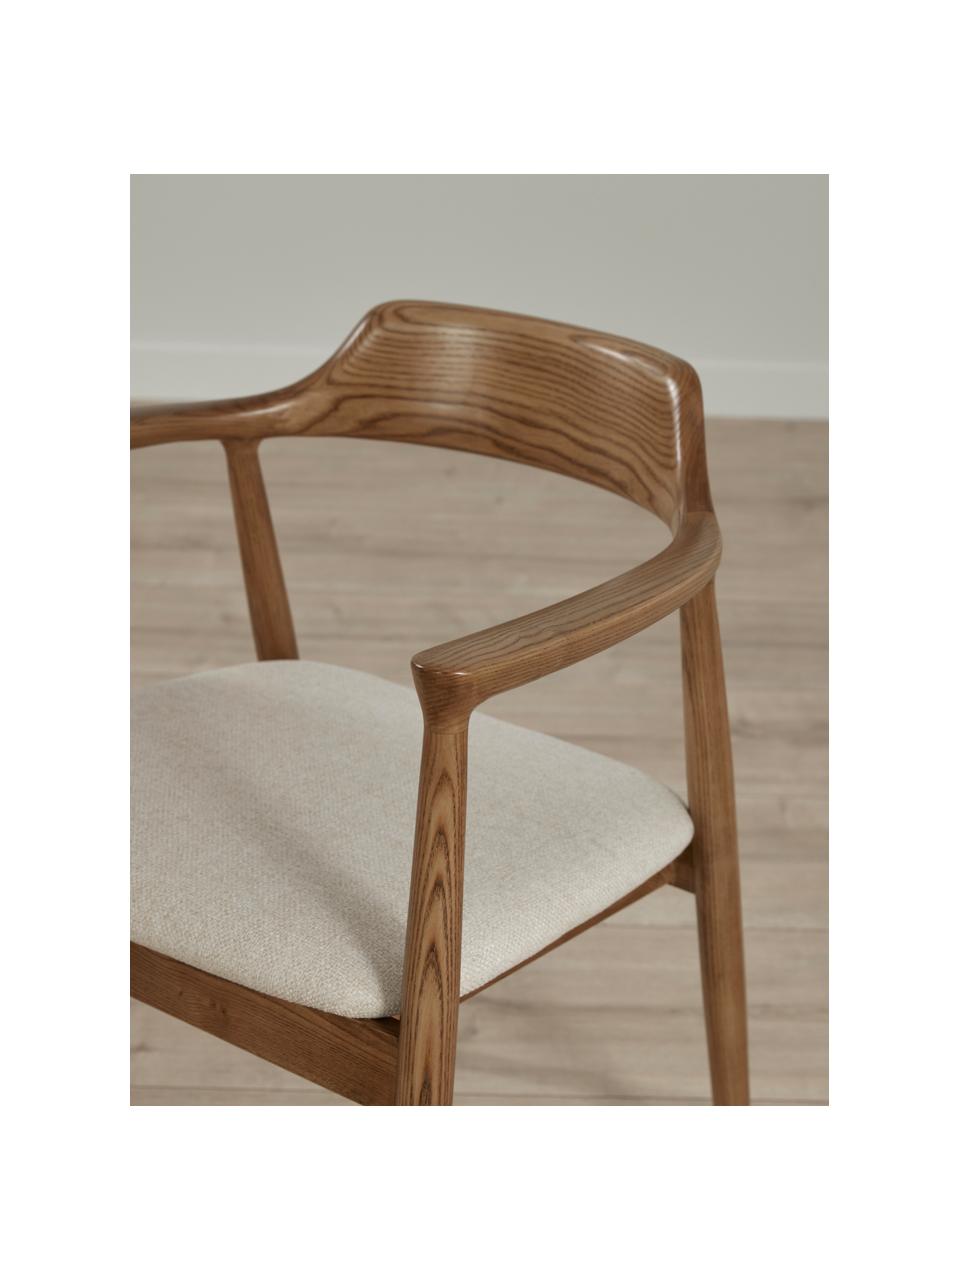 Stolička s opierkami Alis, Béžová, jaseňové drevo, Š 59 x V 78 cm